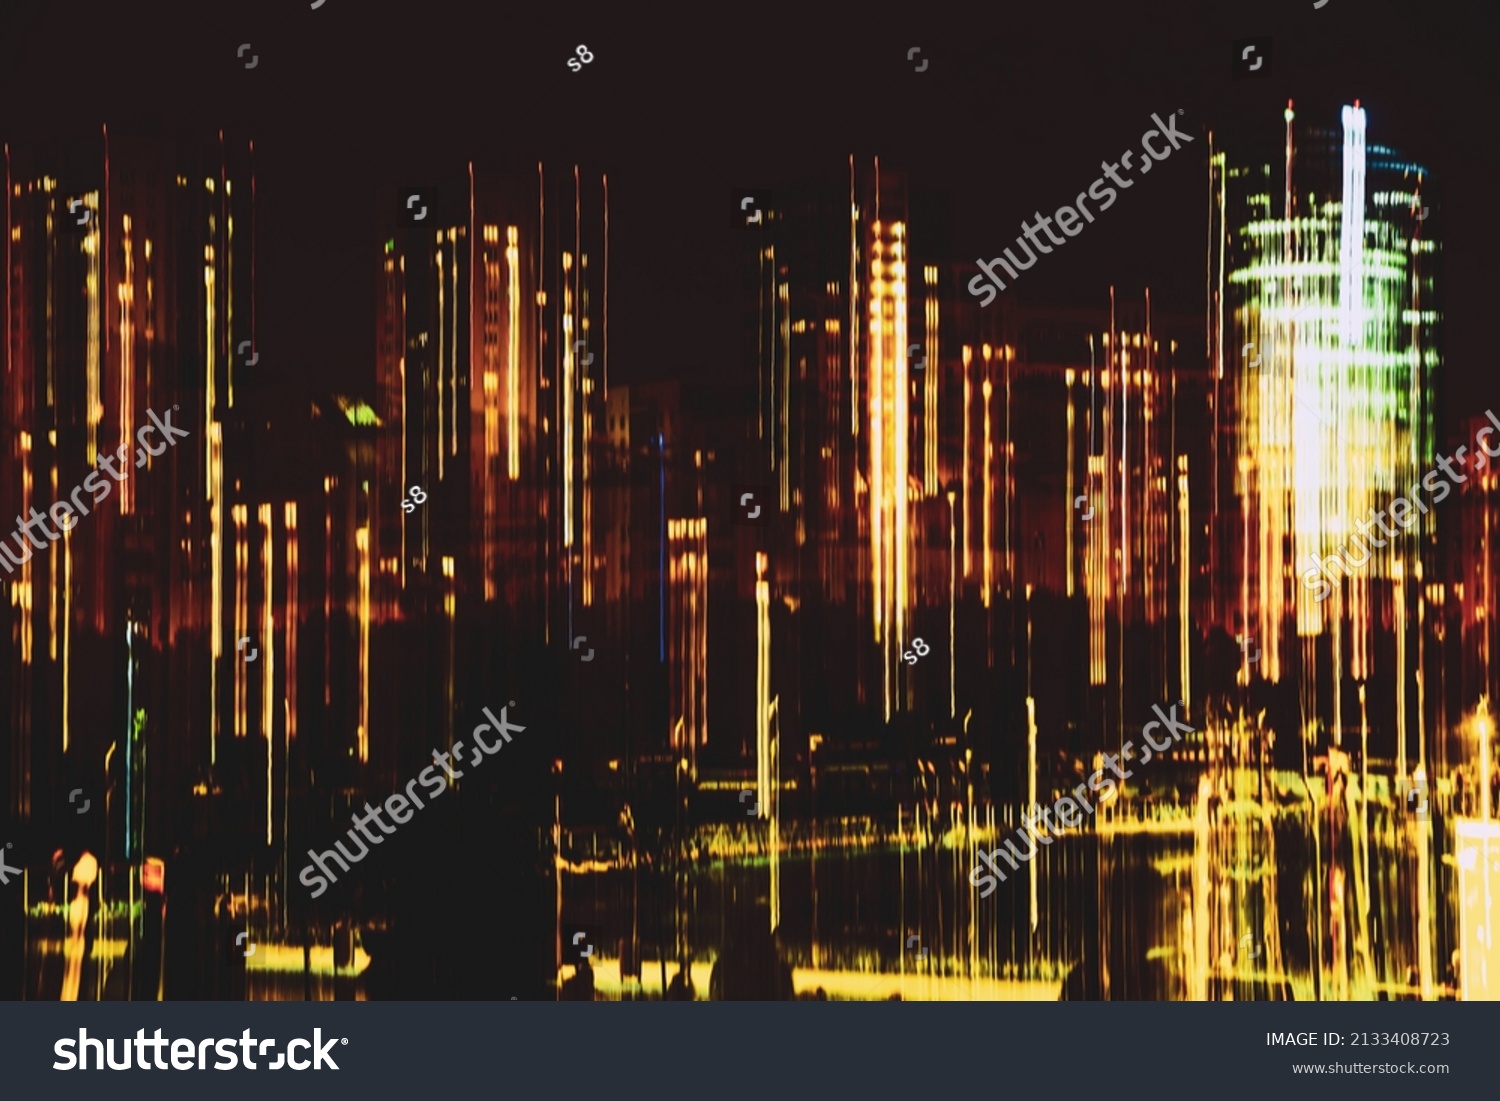 Blurred skyscrapers against dark sky, buildings at night, Illuminated windows. Modern neon city #2133408723